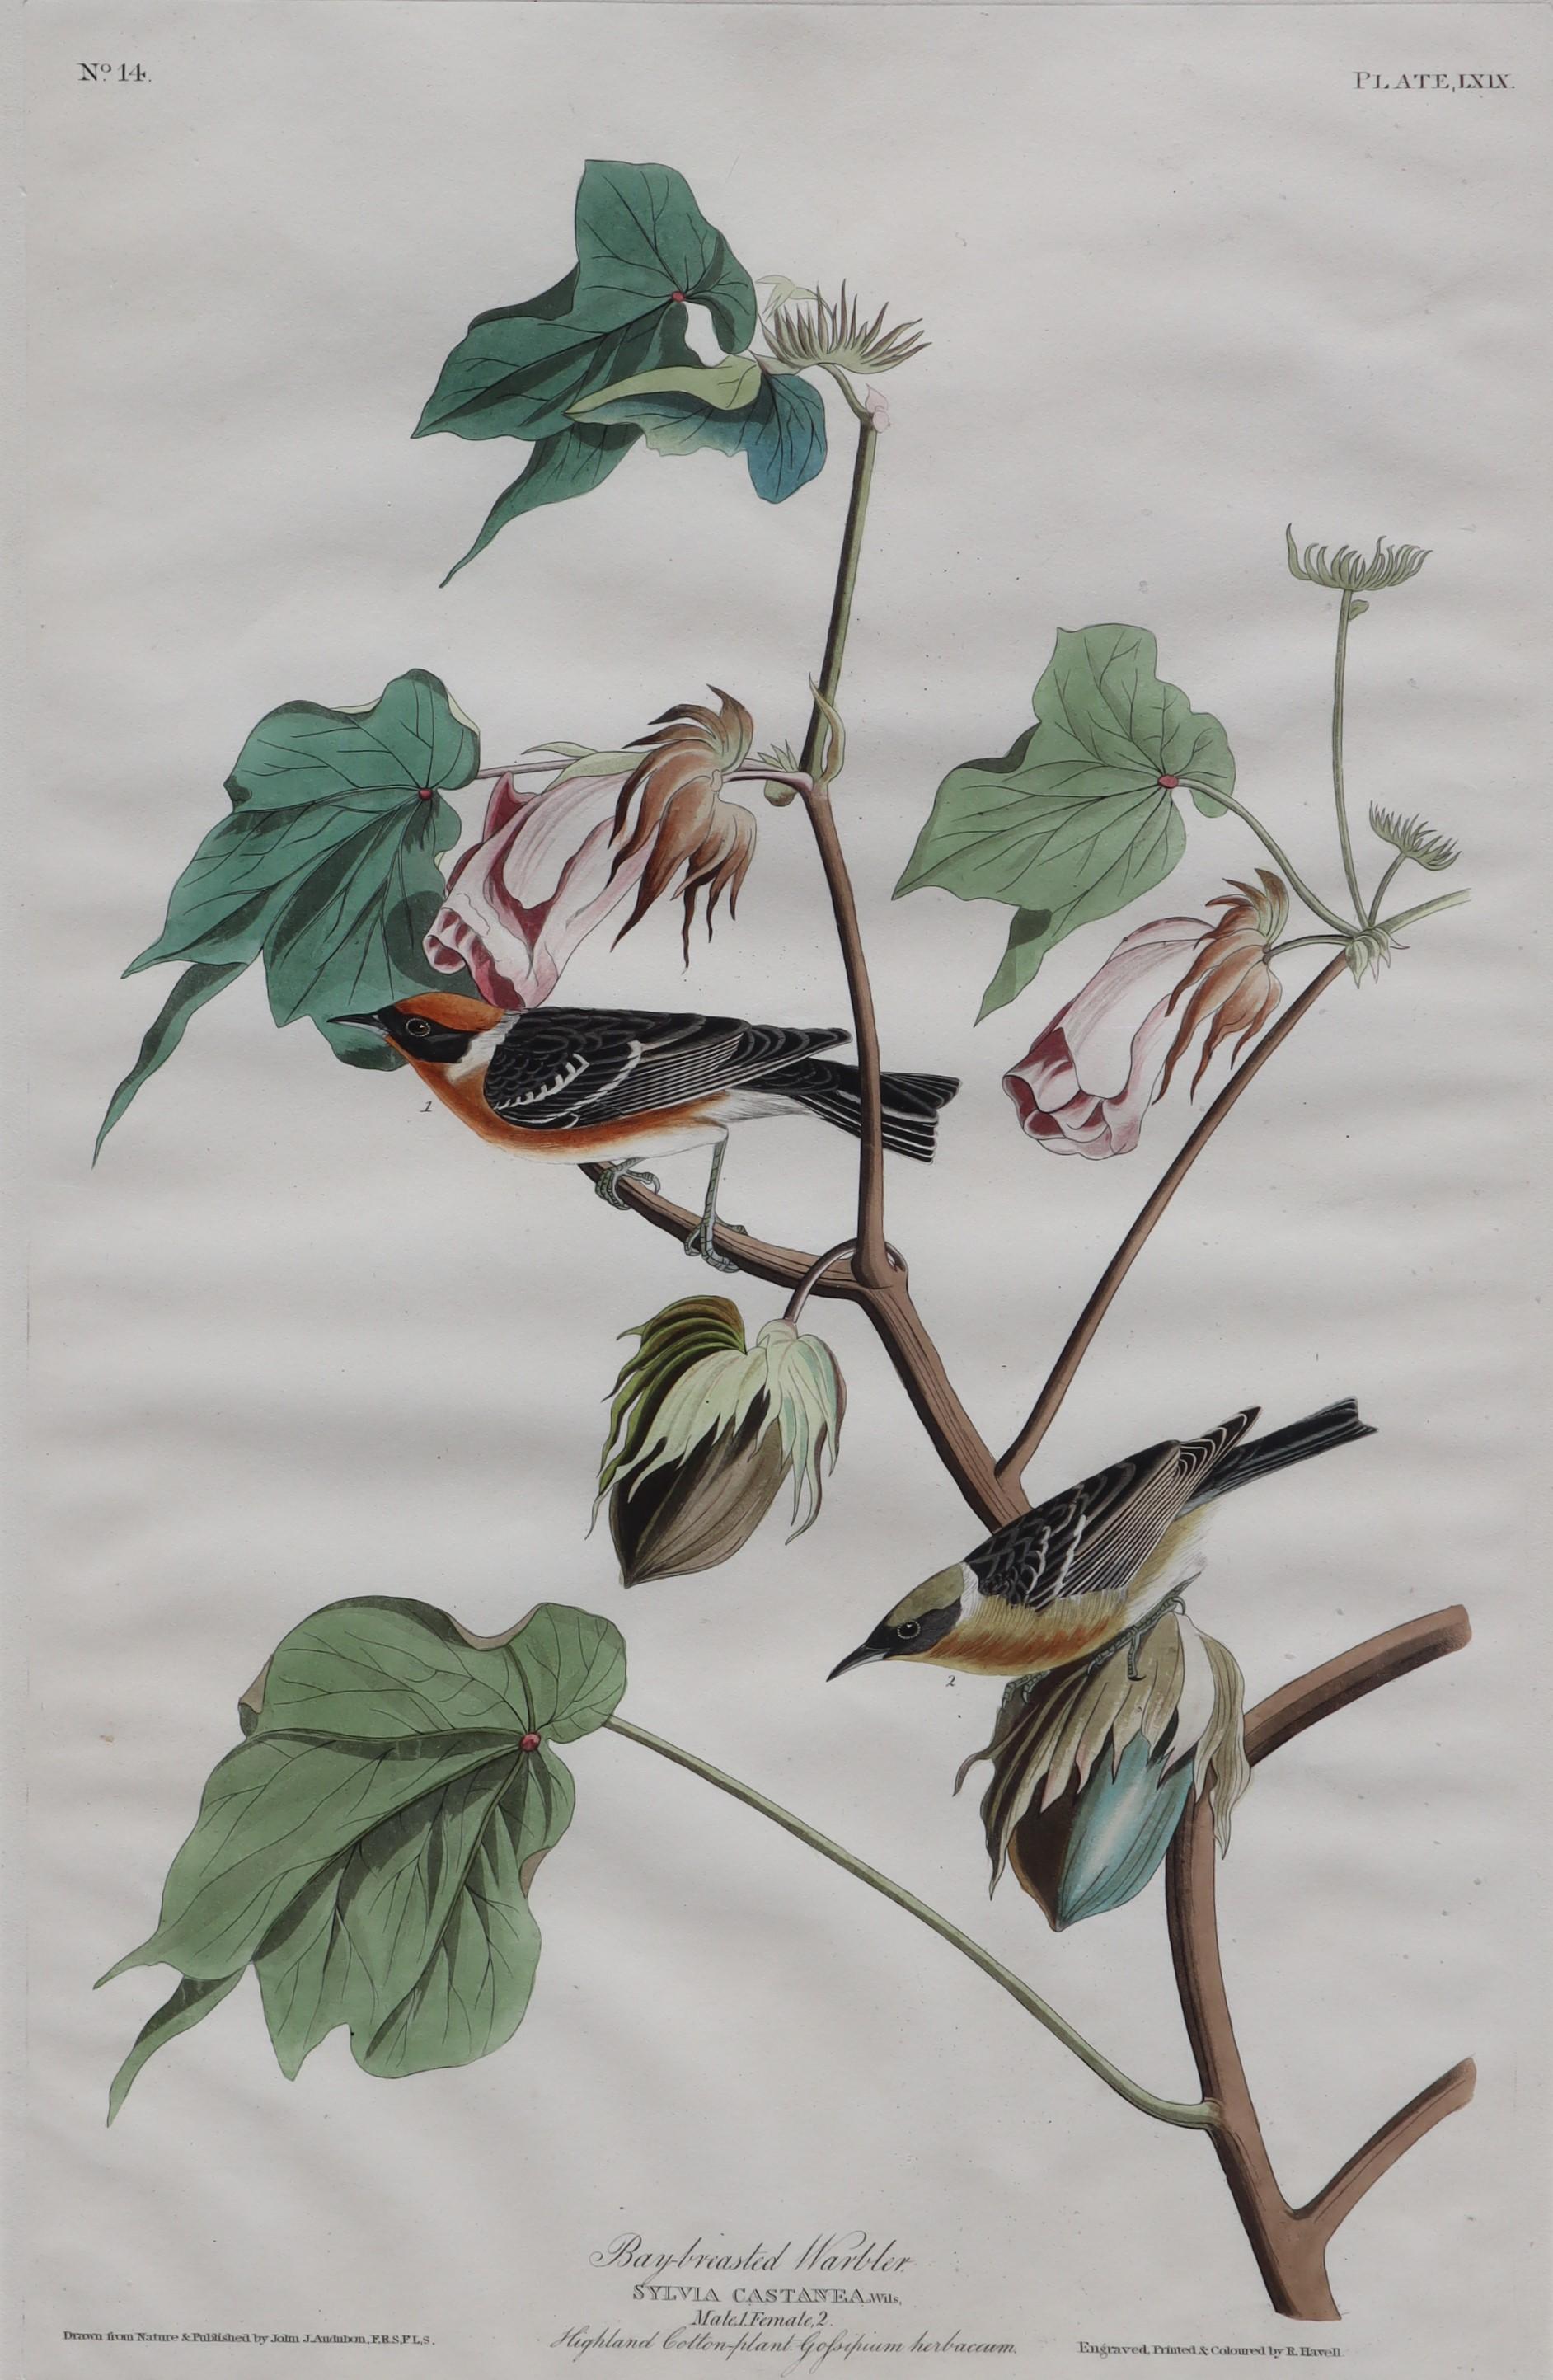 Bay-breasted Warbler, No. 14, Plate LXIX - Art by John James Audubon